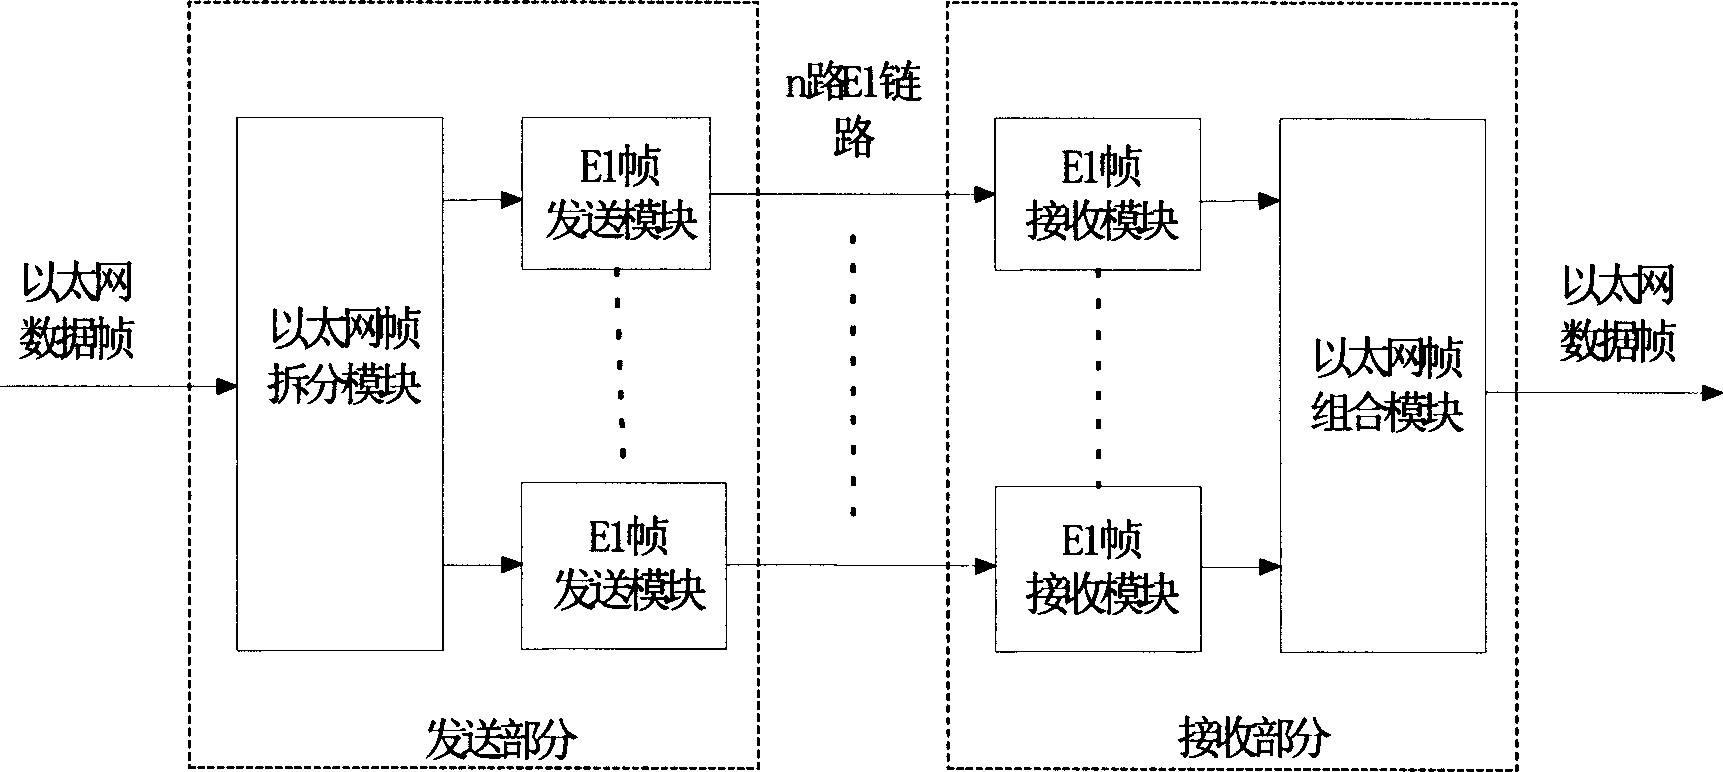 Method and system for transmitting Ethernet data using multiple E1 lines